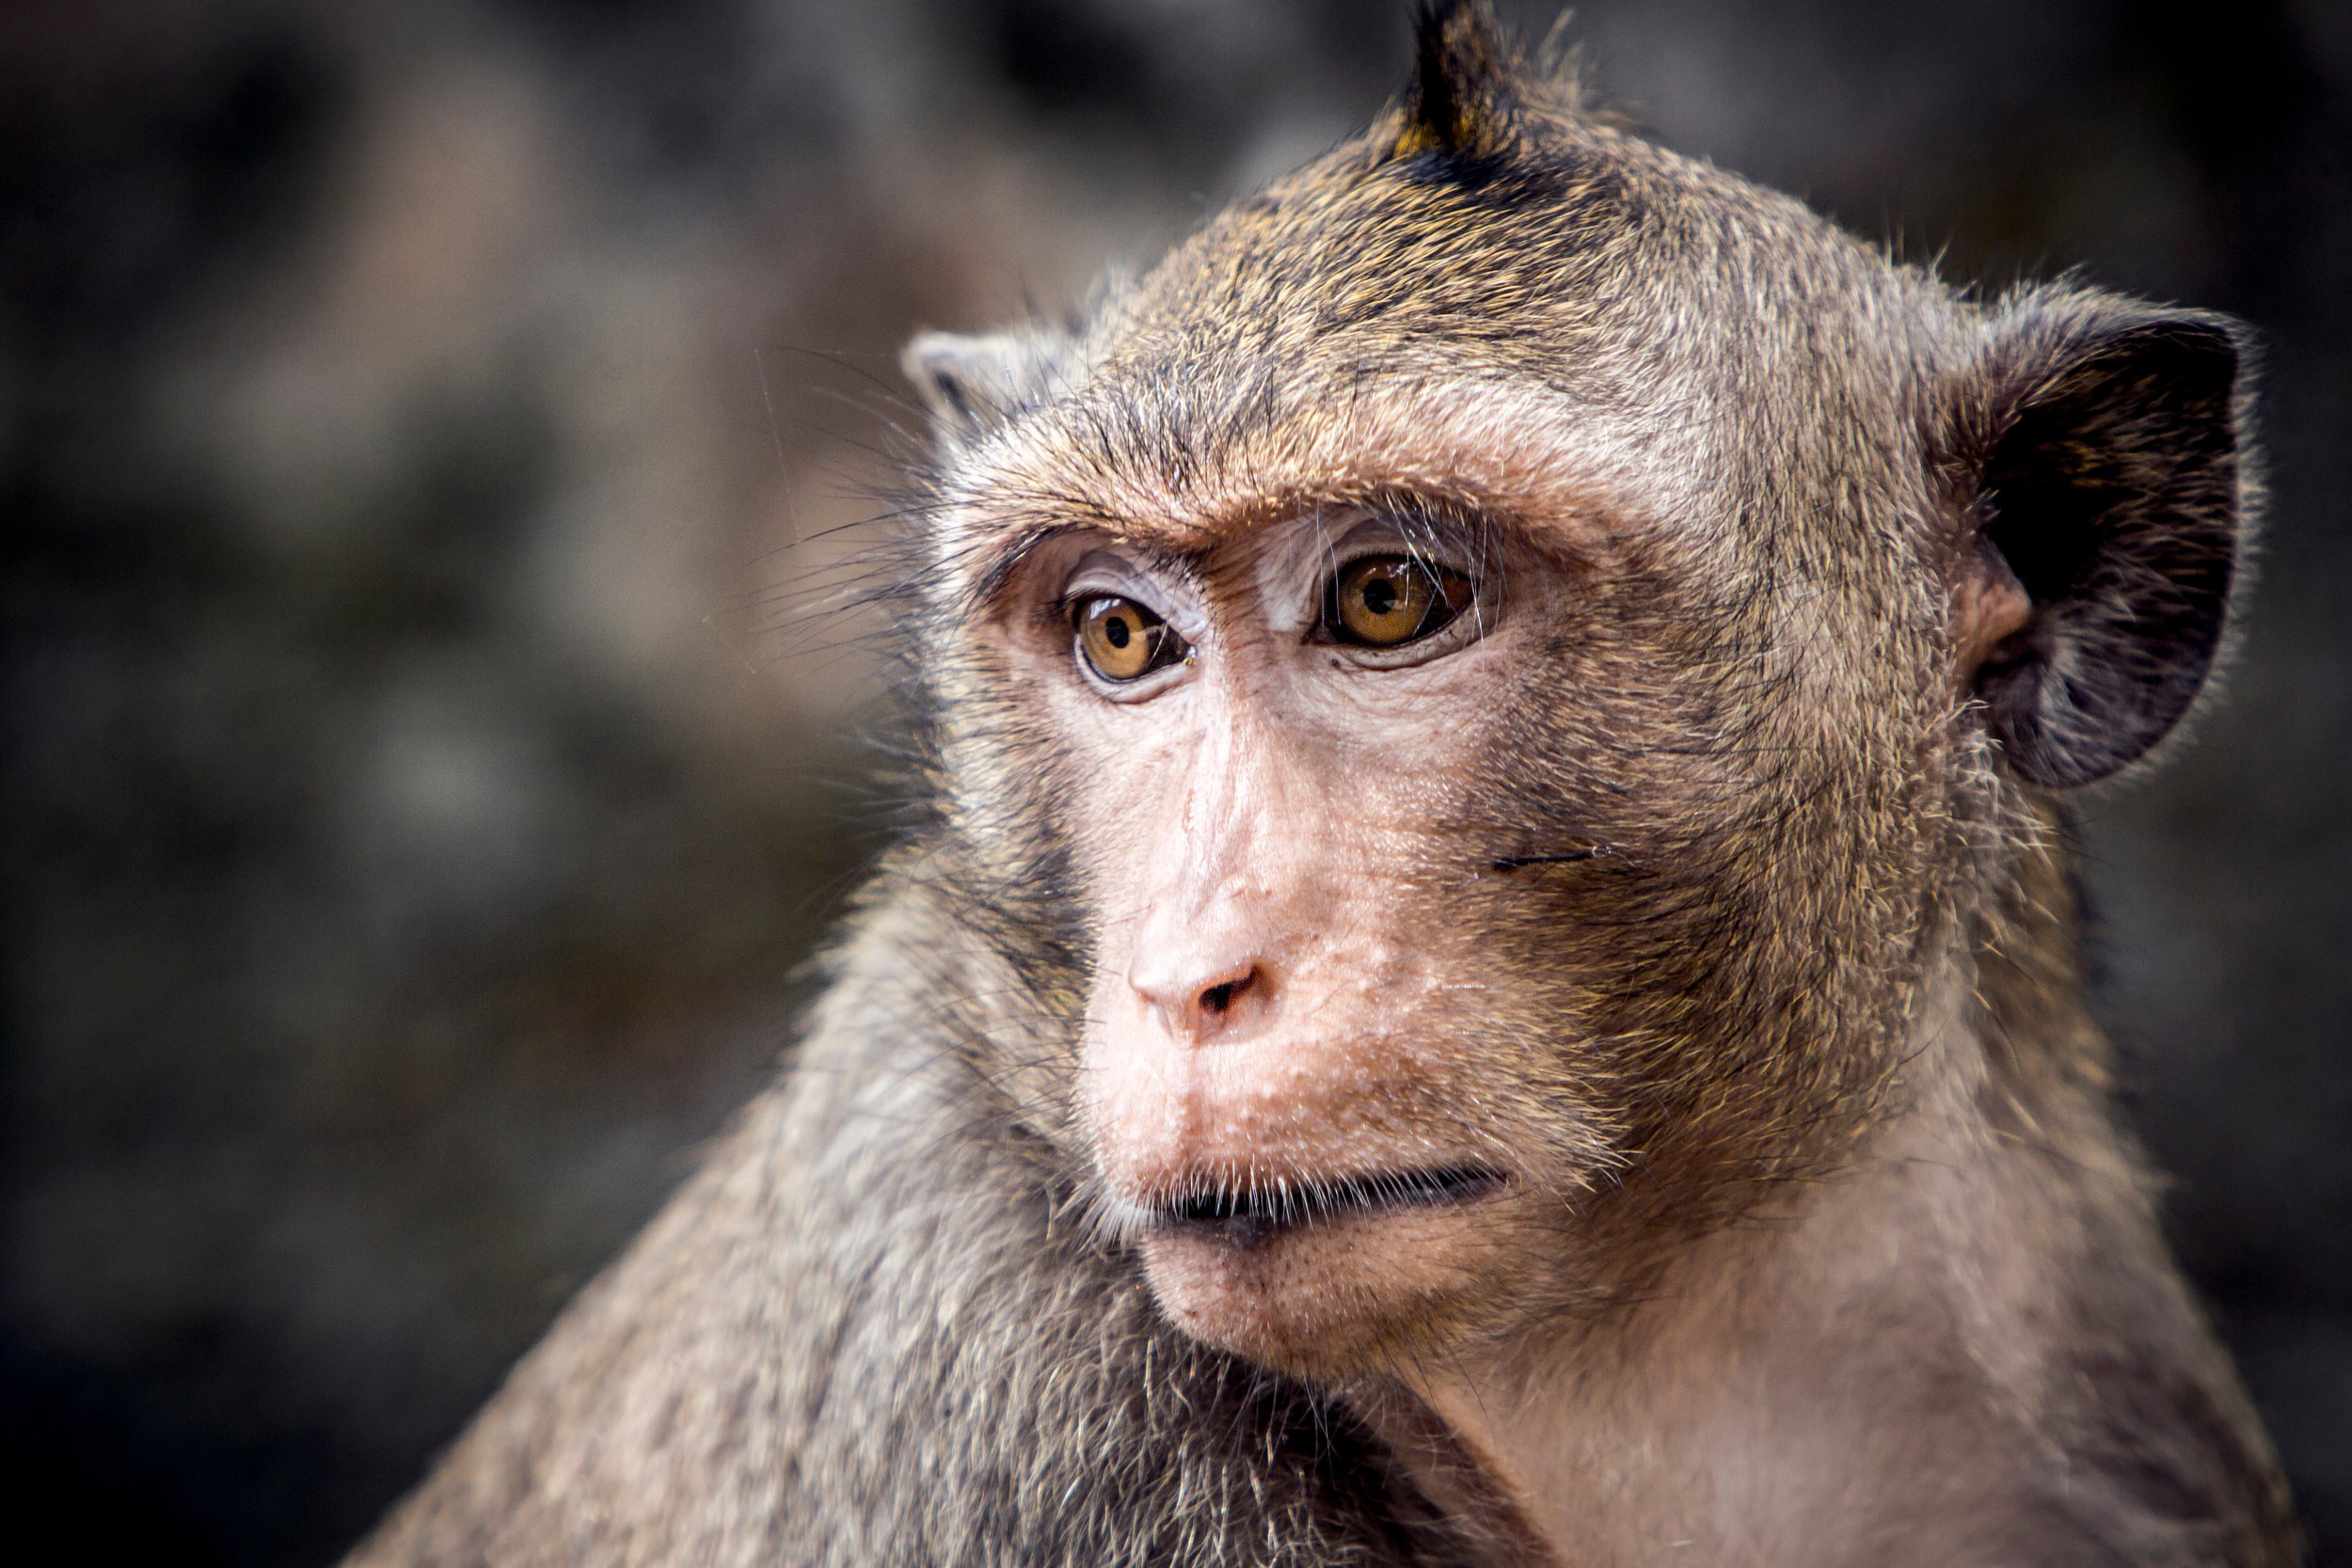 Feeding monkeys may harm their health : The Tribune India